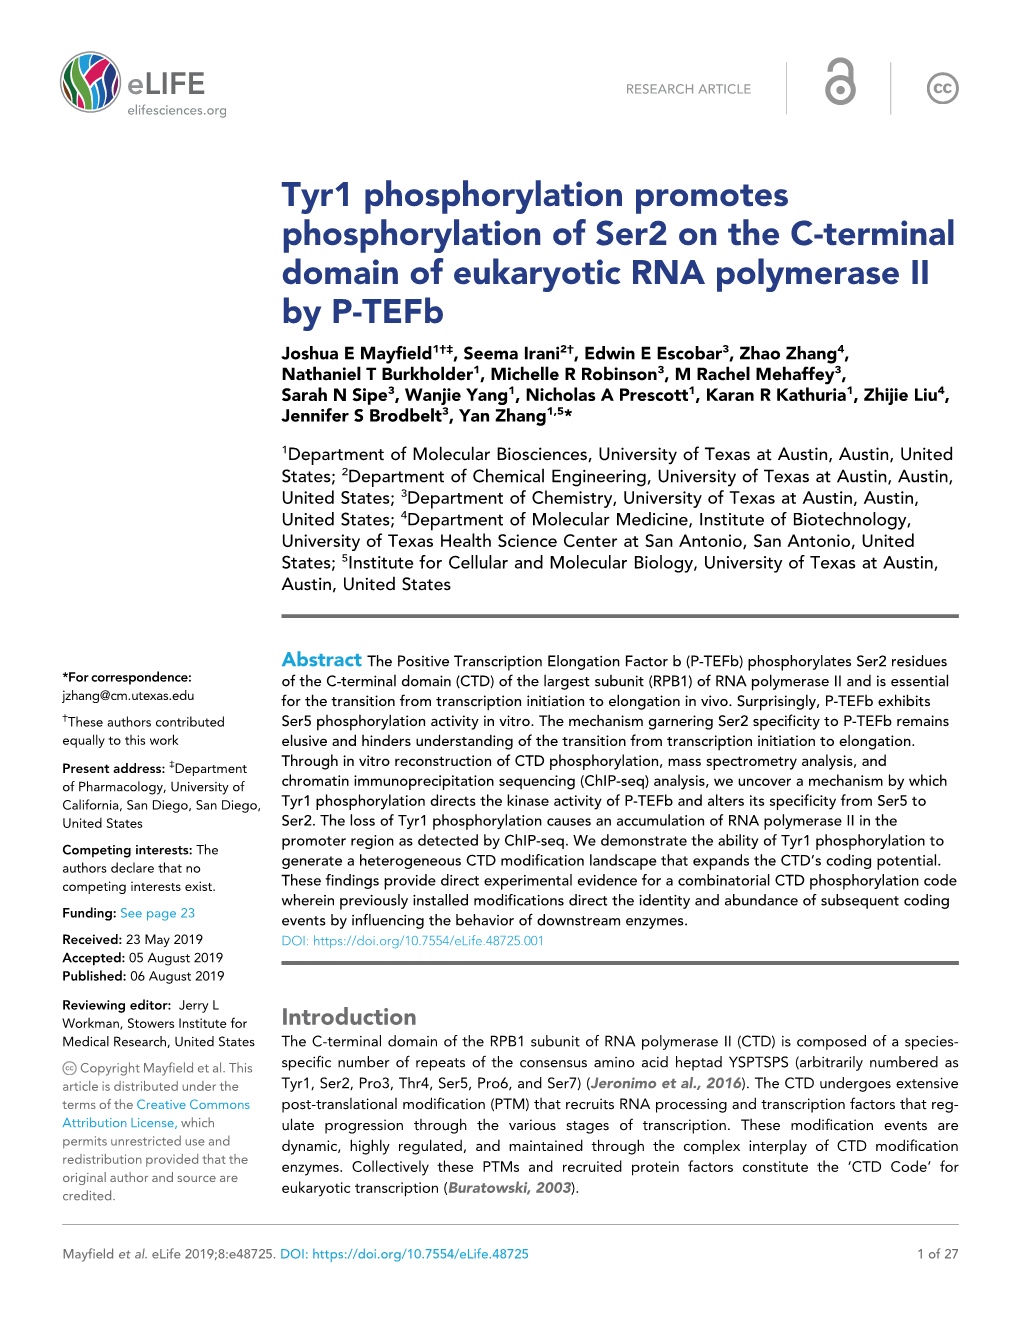 Tyr1 Phosphorylation Promotes Phosphorylation of Ser2 On